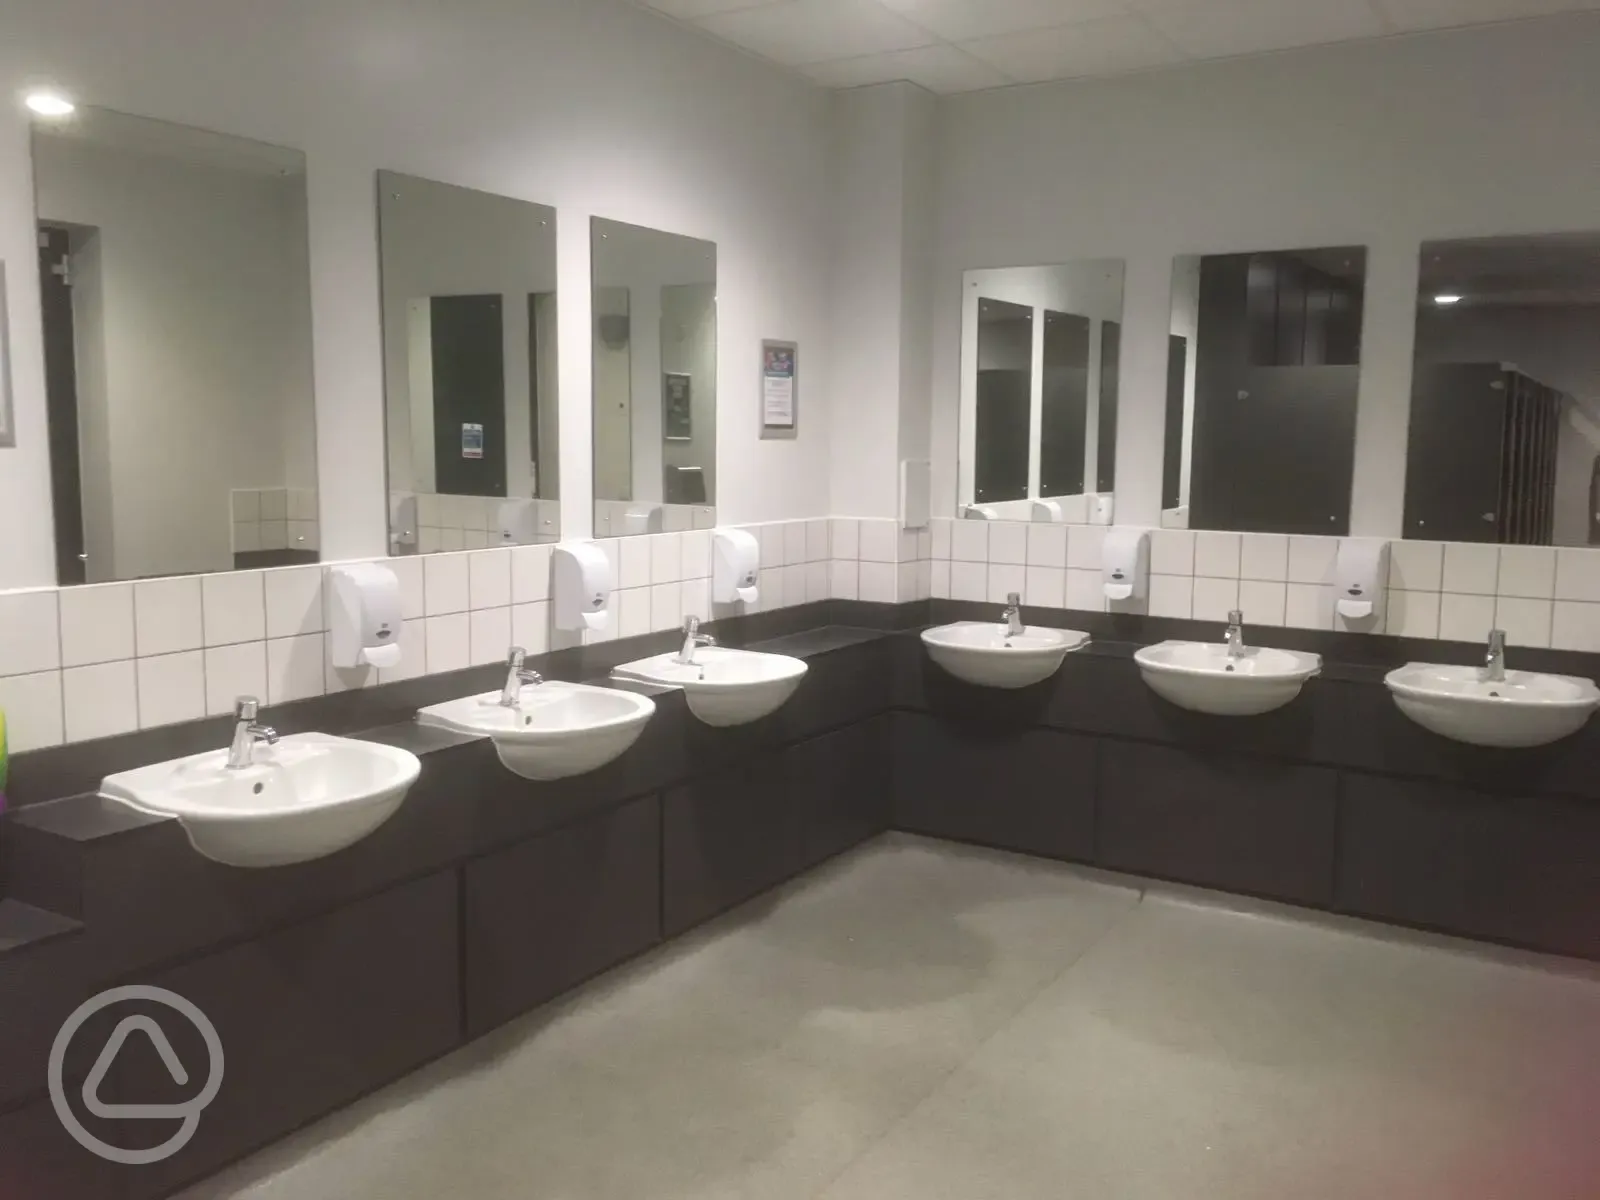 WC Facilities